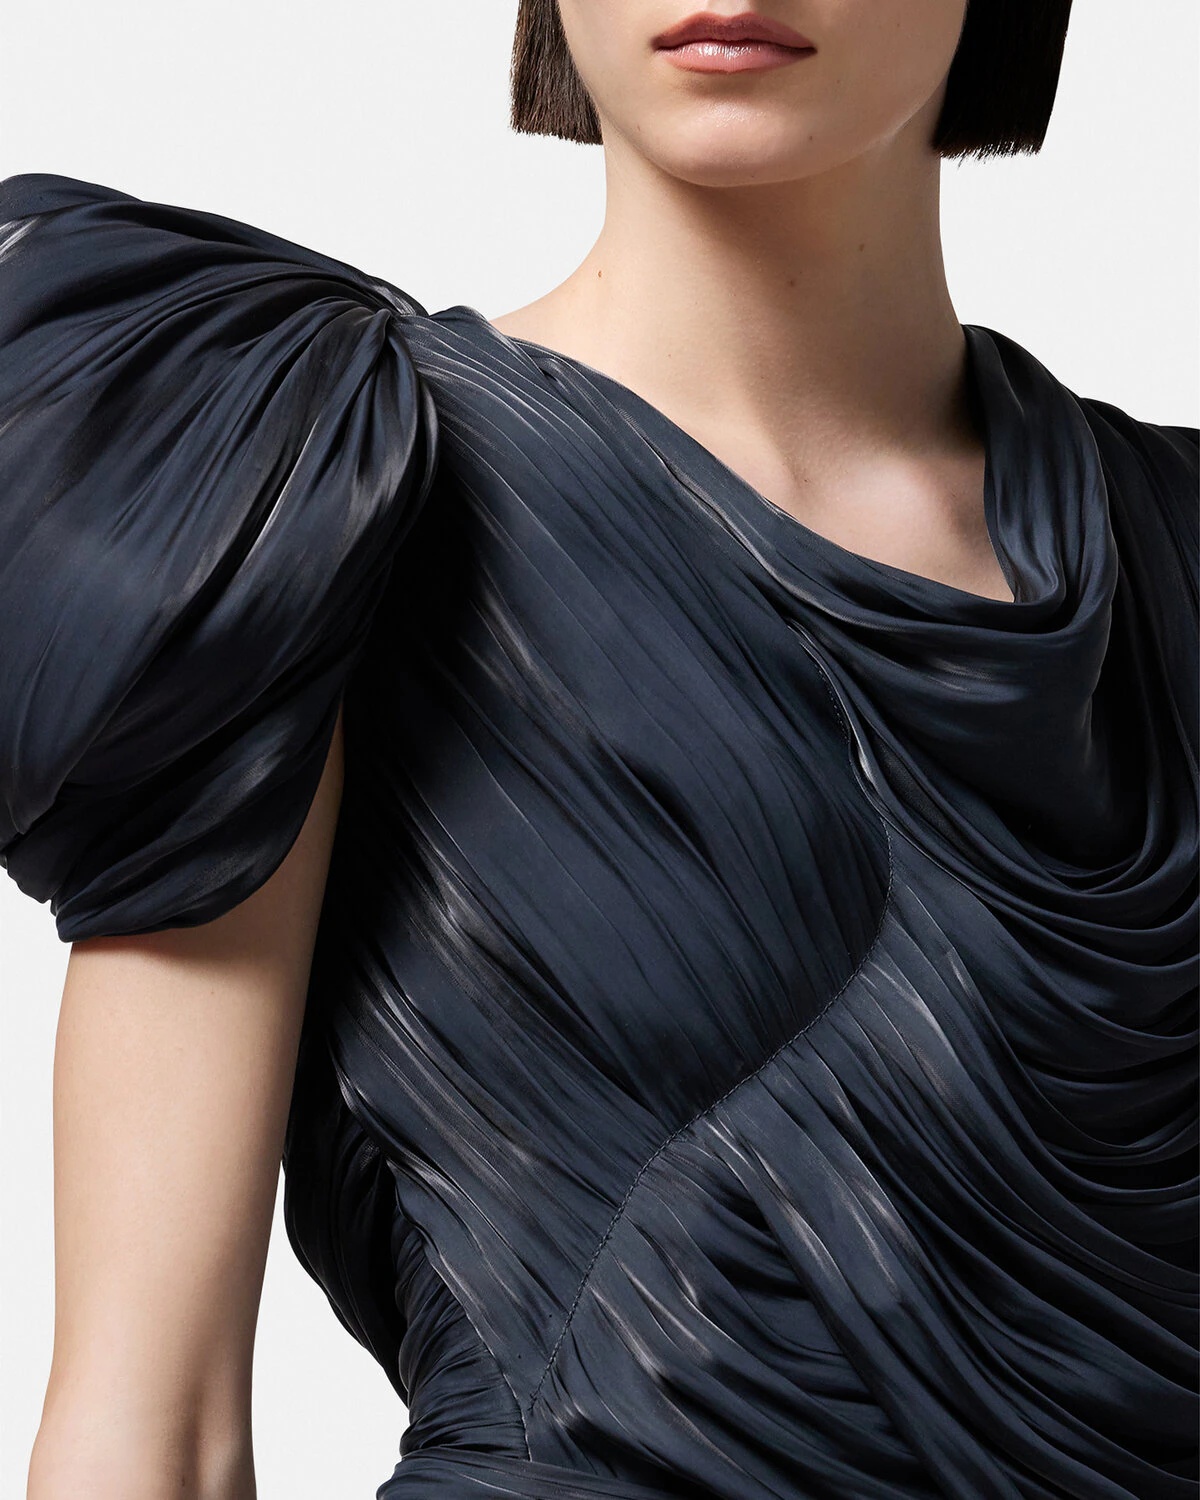 Versace Women's Medusa Fluid Midi Dress in Black